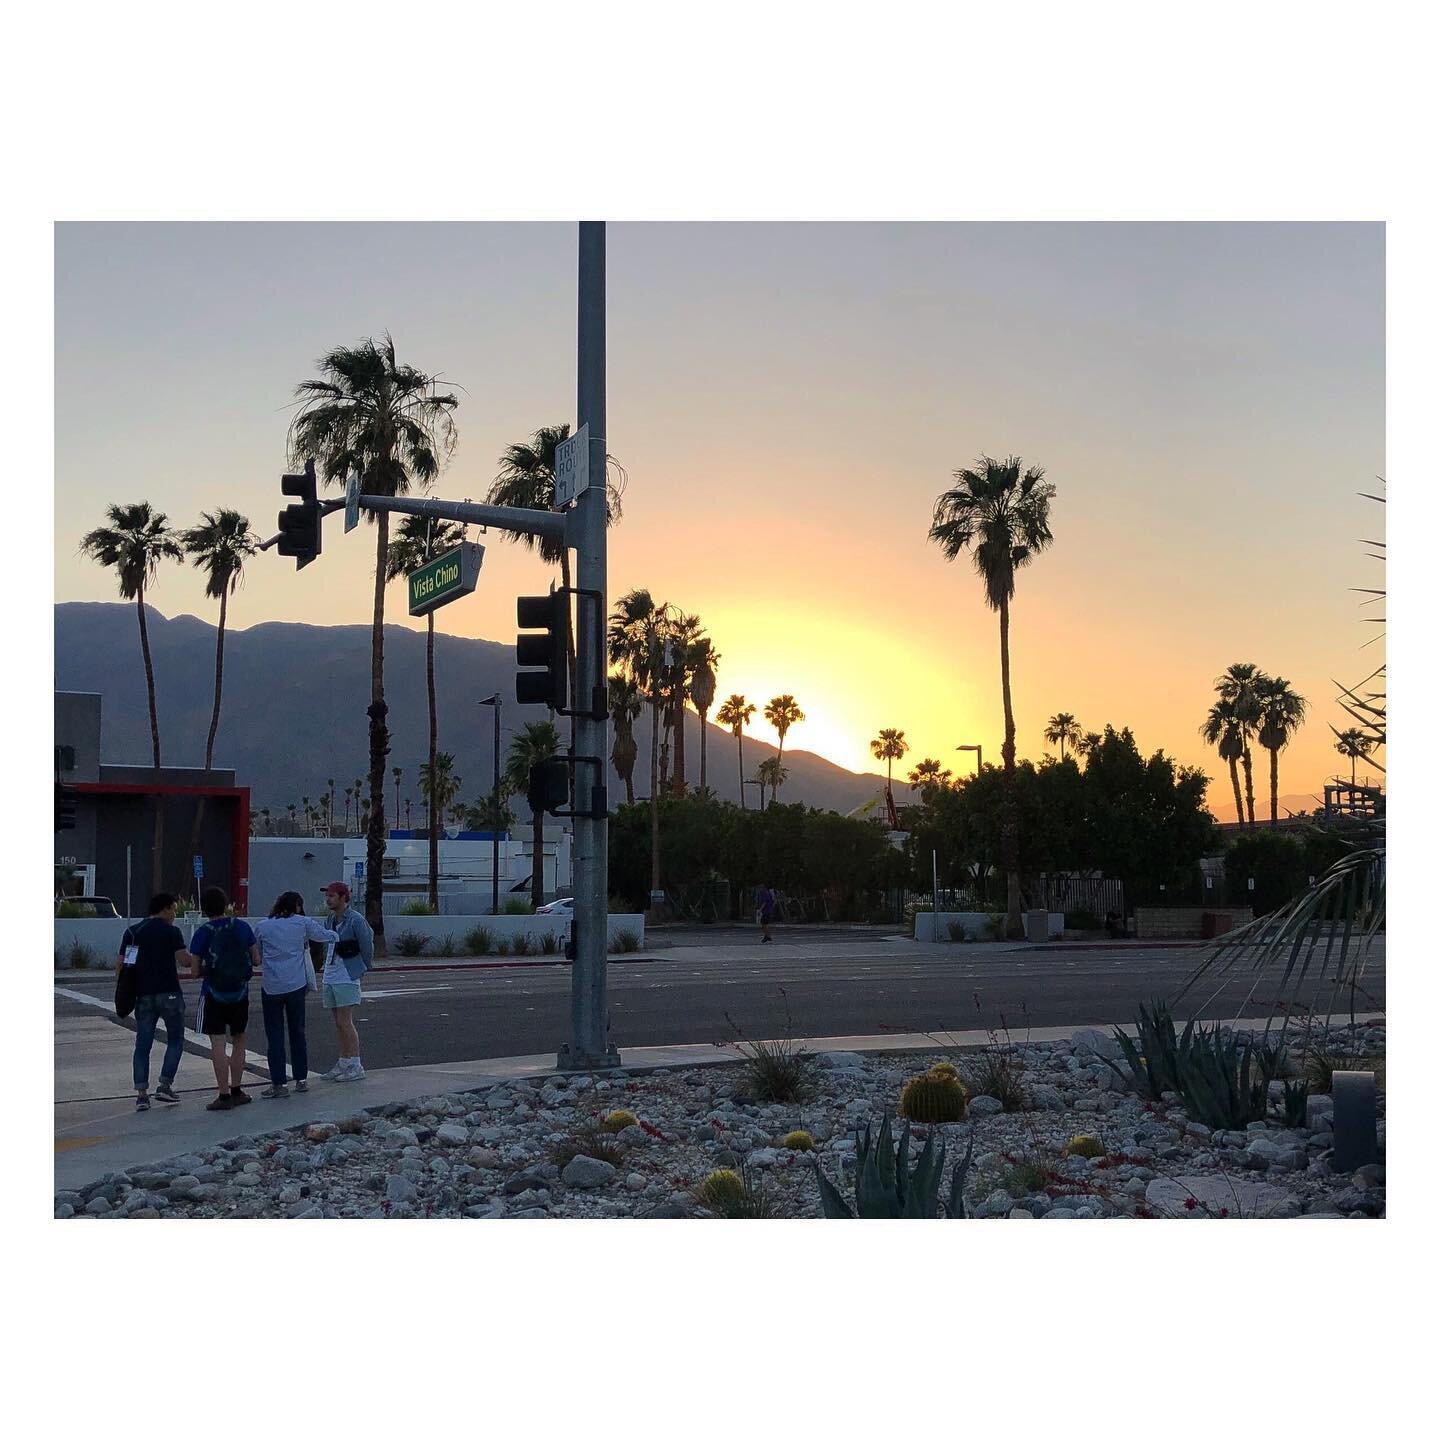 Sunset 🌴
.
.
.
#palmsprings #usa #california #sunset #friends #film #shortfilmfestival #psshortfest #vistachino #american #road #palm @psfilmfest @californiaholics @cali_invite_you @california4fun @californiathroughmylens @caliloveofficial